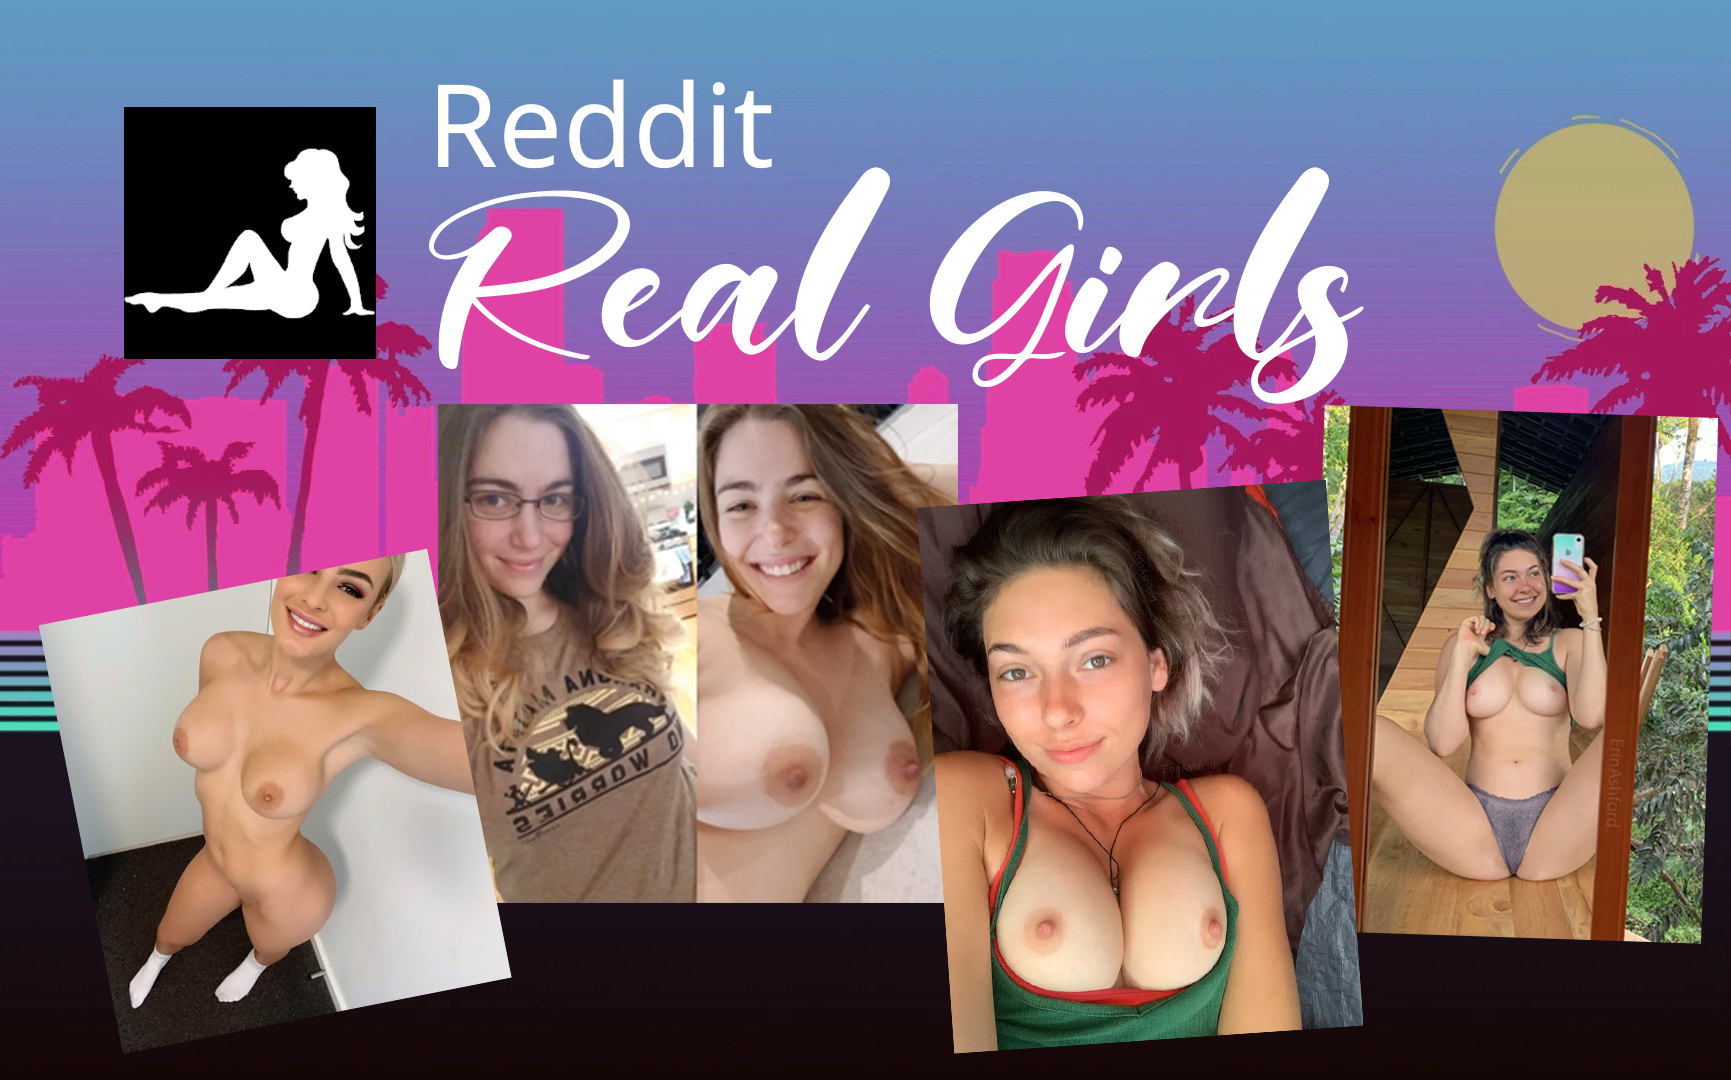 Reddit real gorls